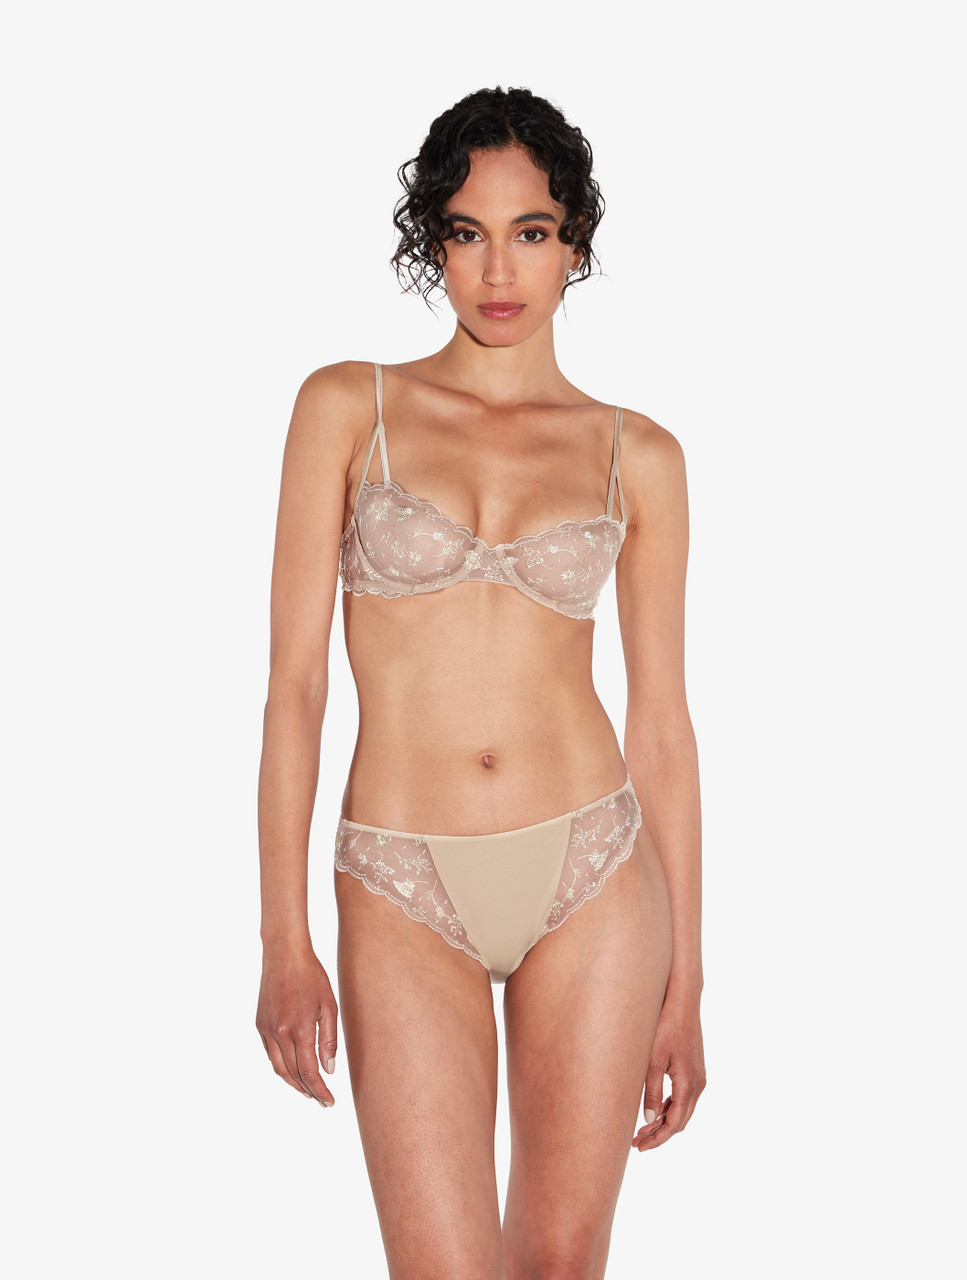 Zara nude lace bralette 🐻 such a pretty mesh and